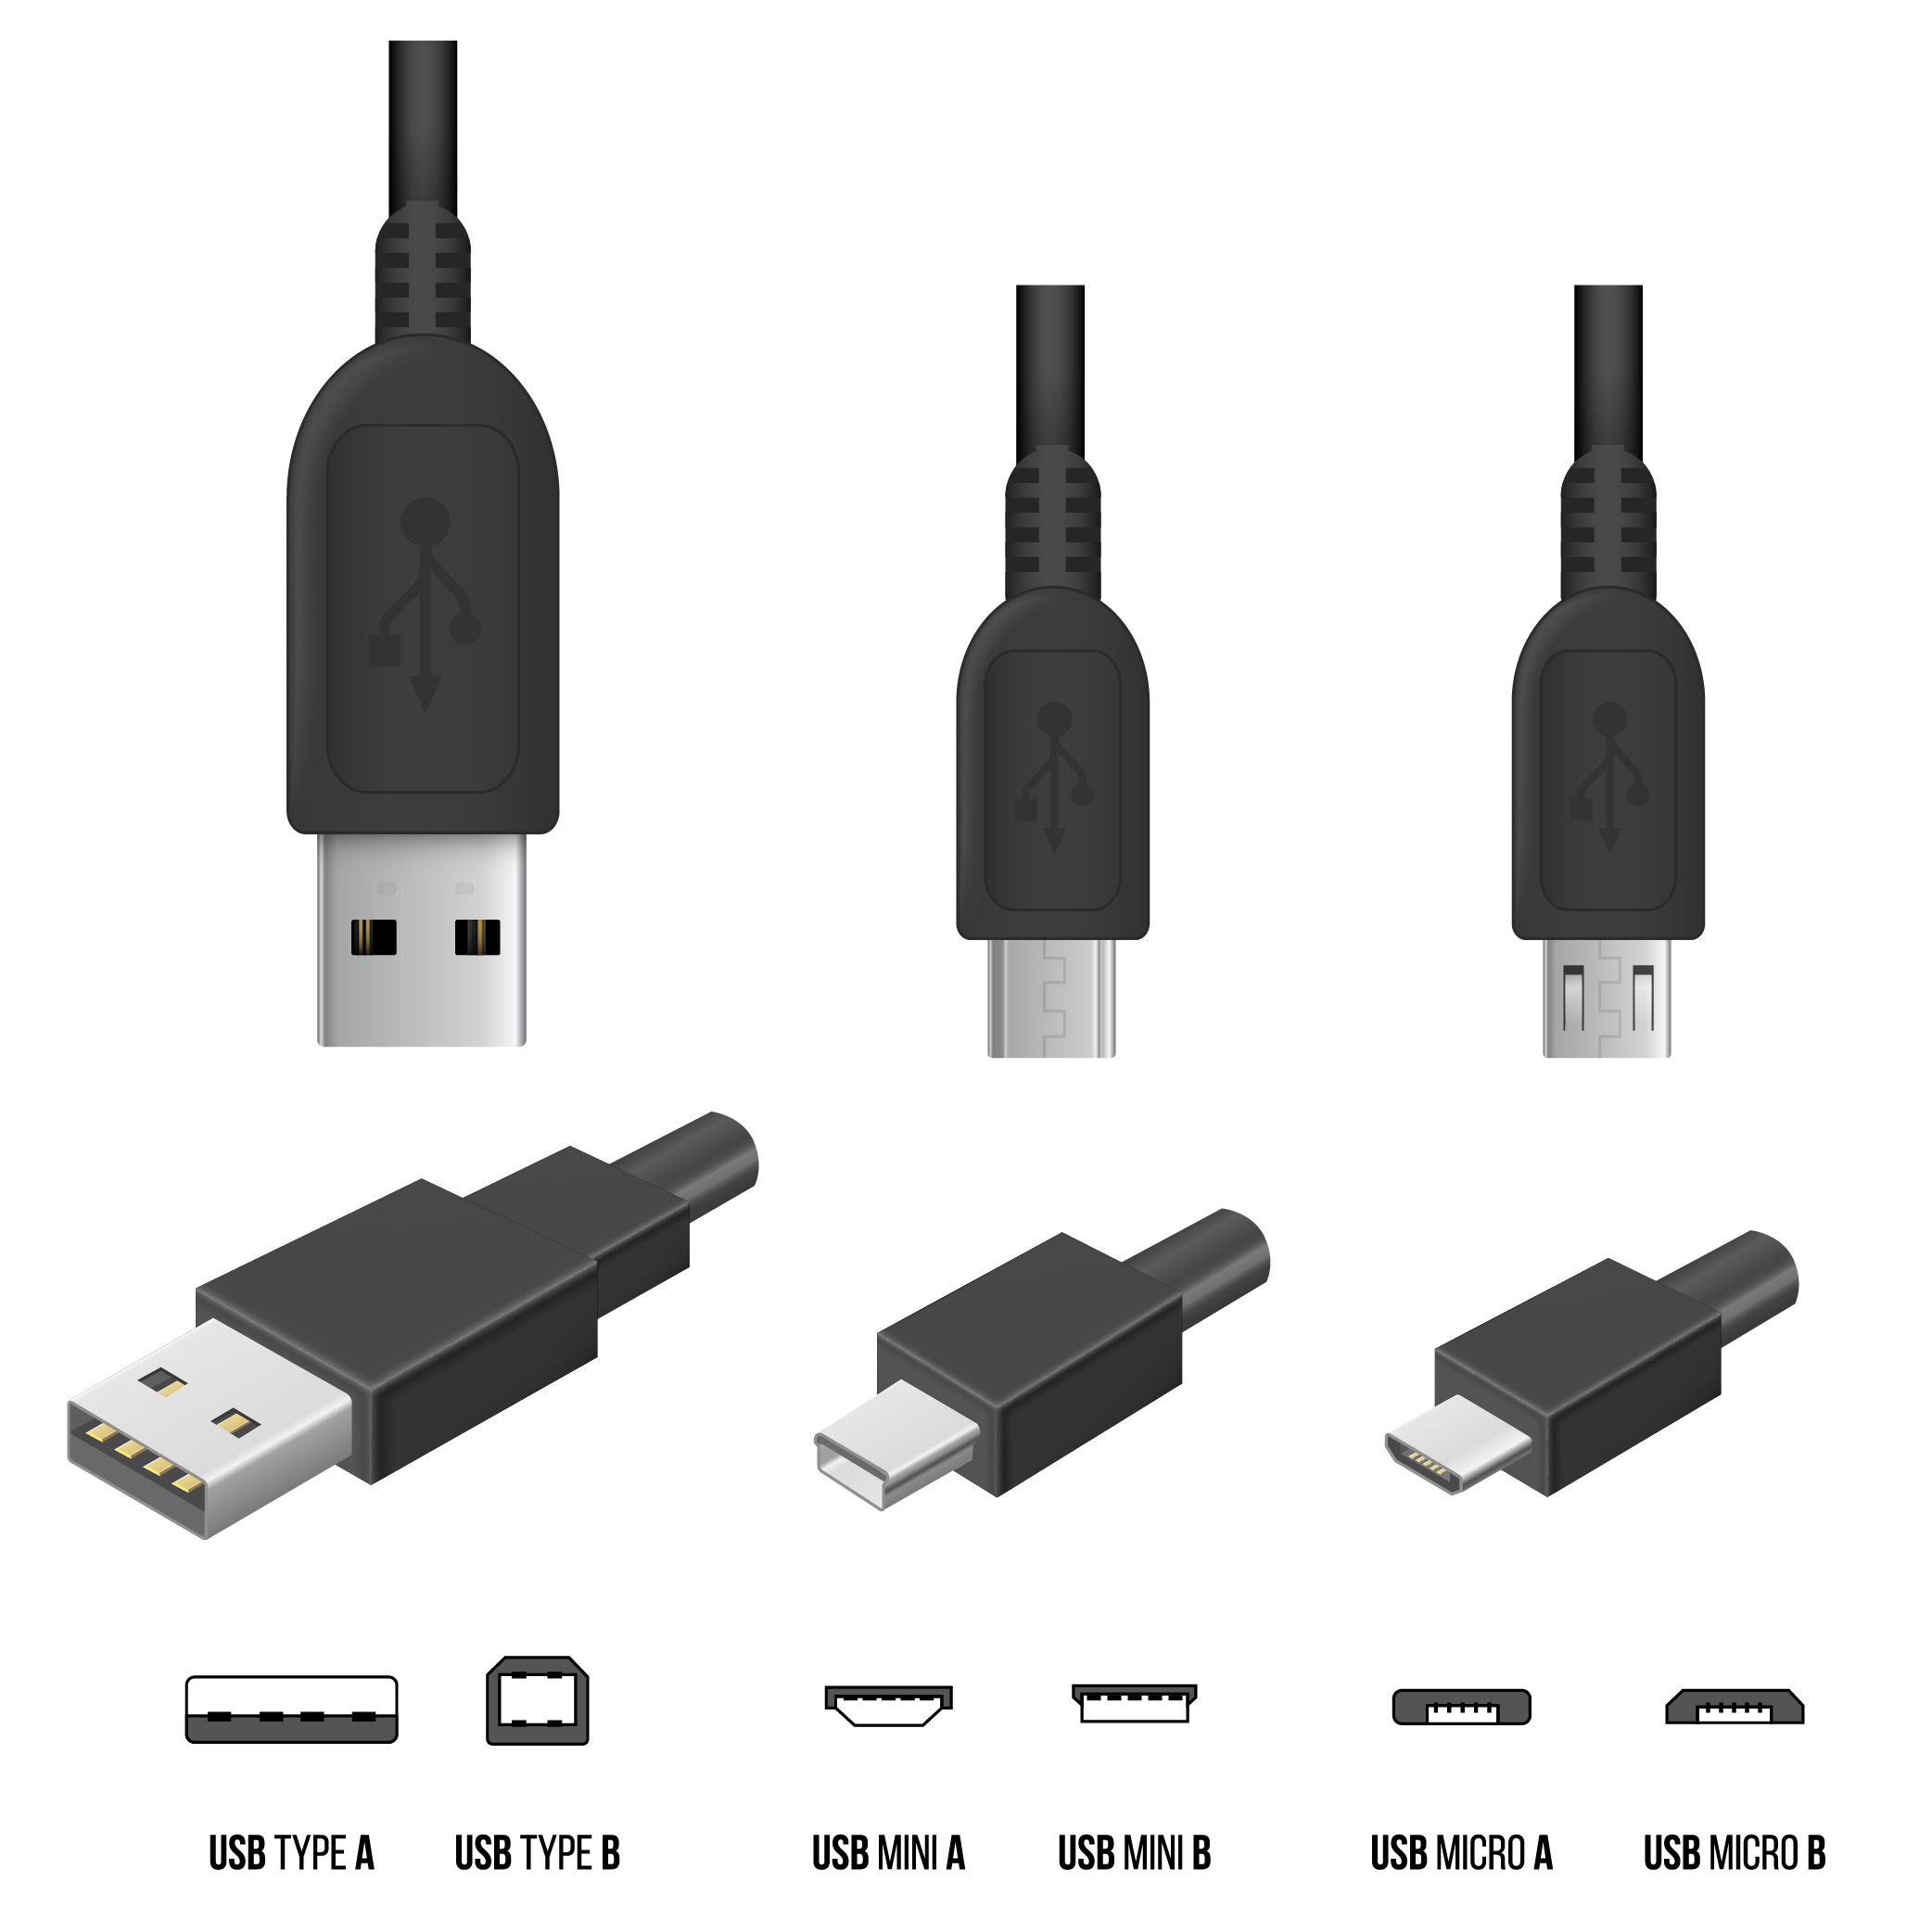 Mini USB vs. Micro USB: the Difference?